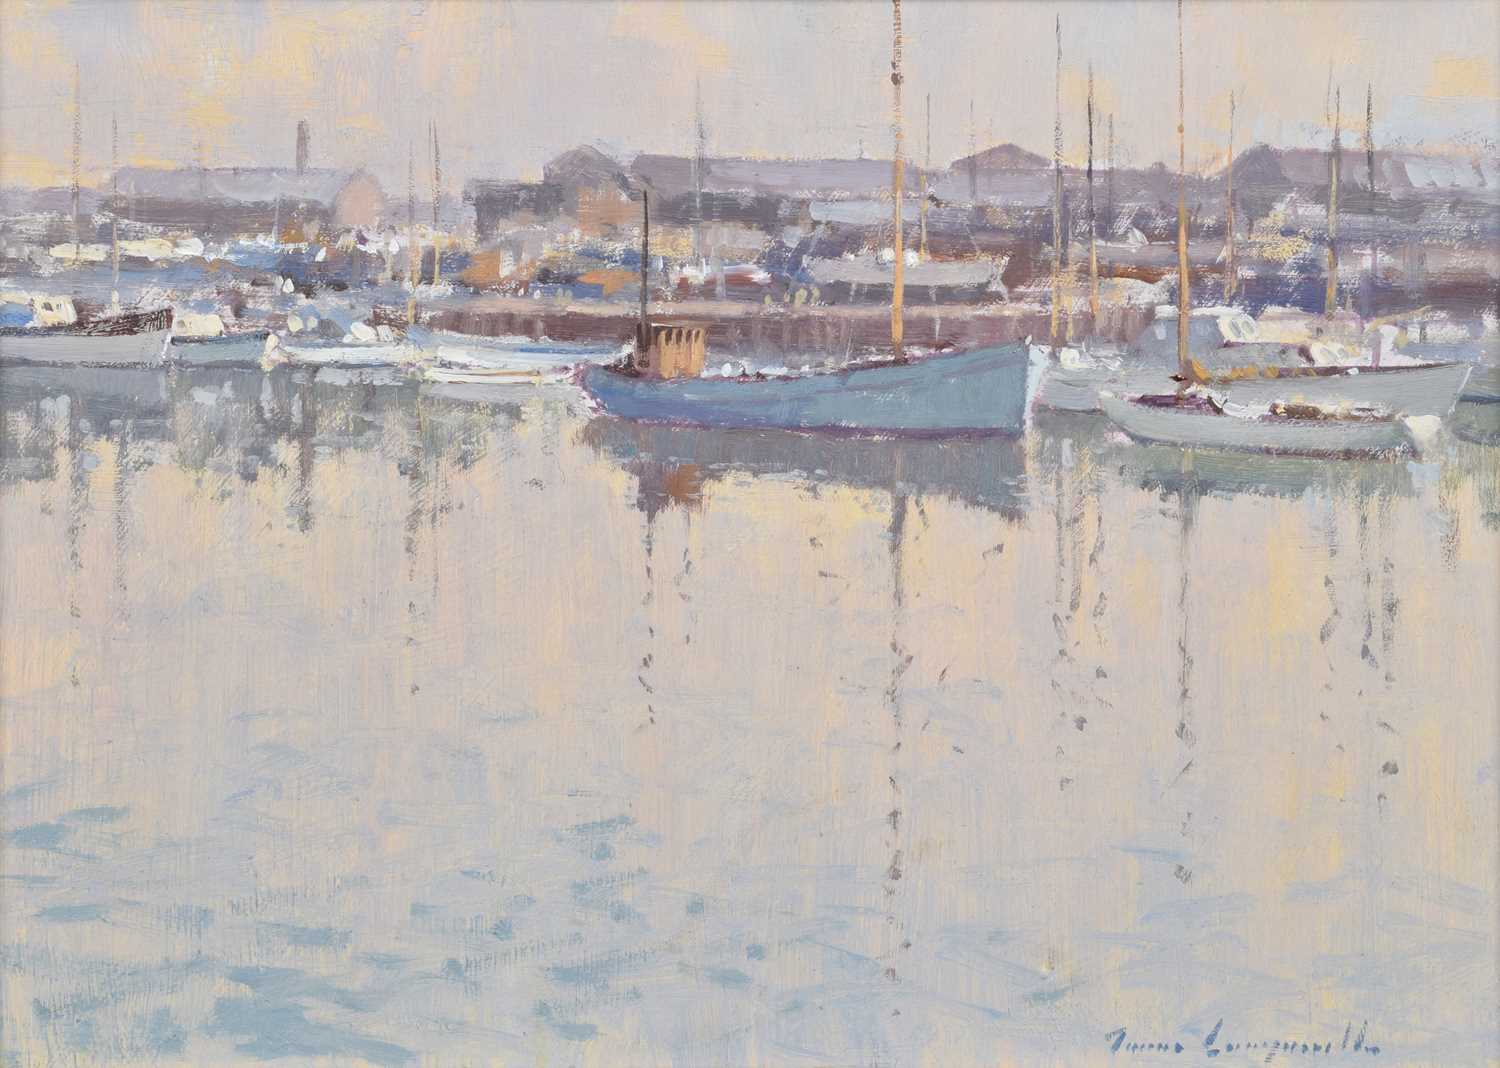 James Longueville P.S., R.B.S.A. (British 1942-) "Boatyard, Old Bristol Docks"